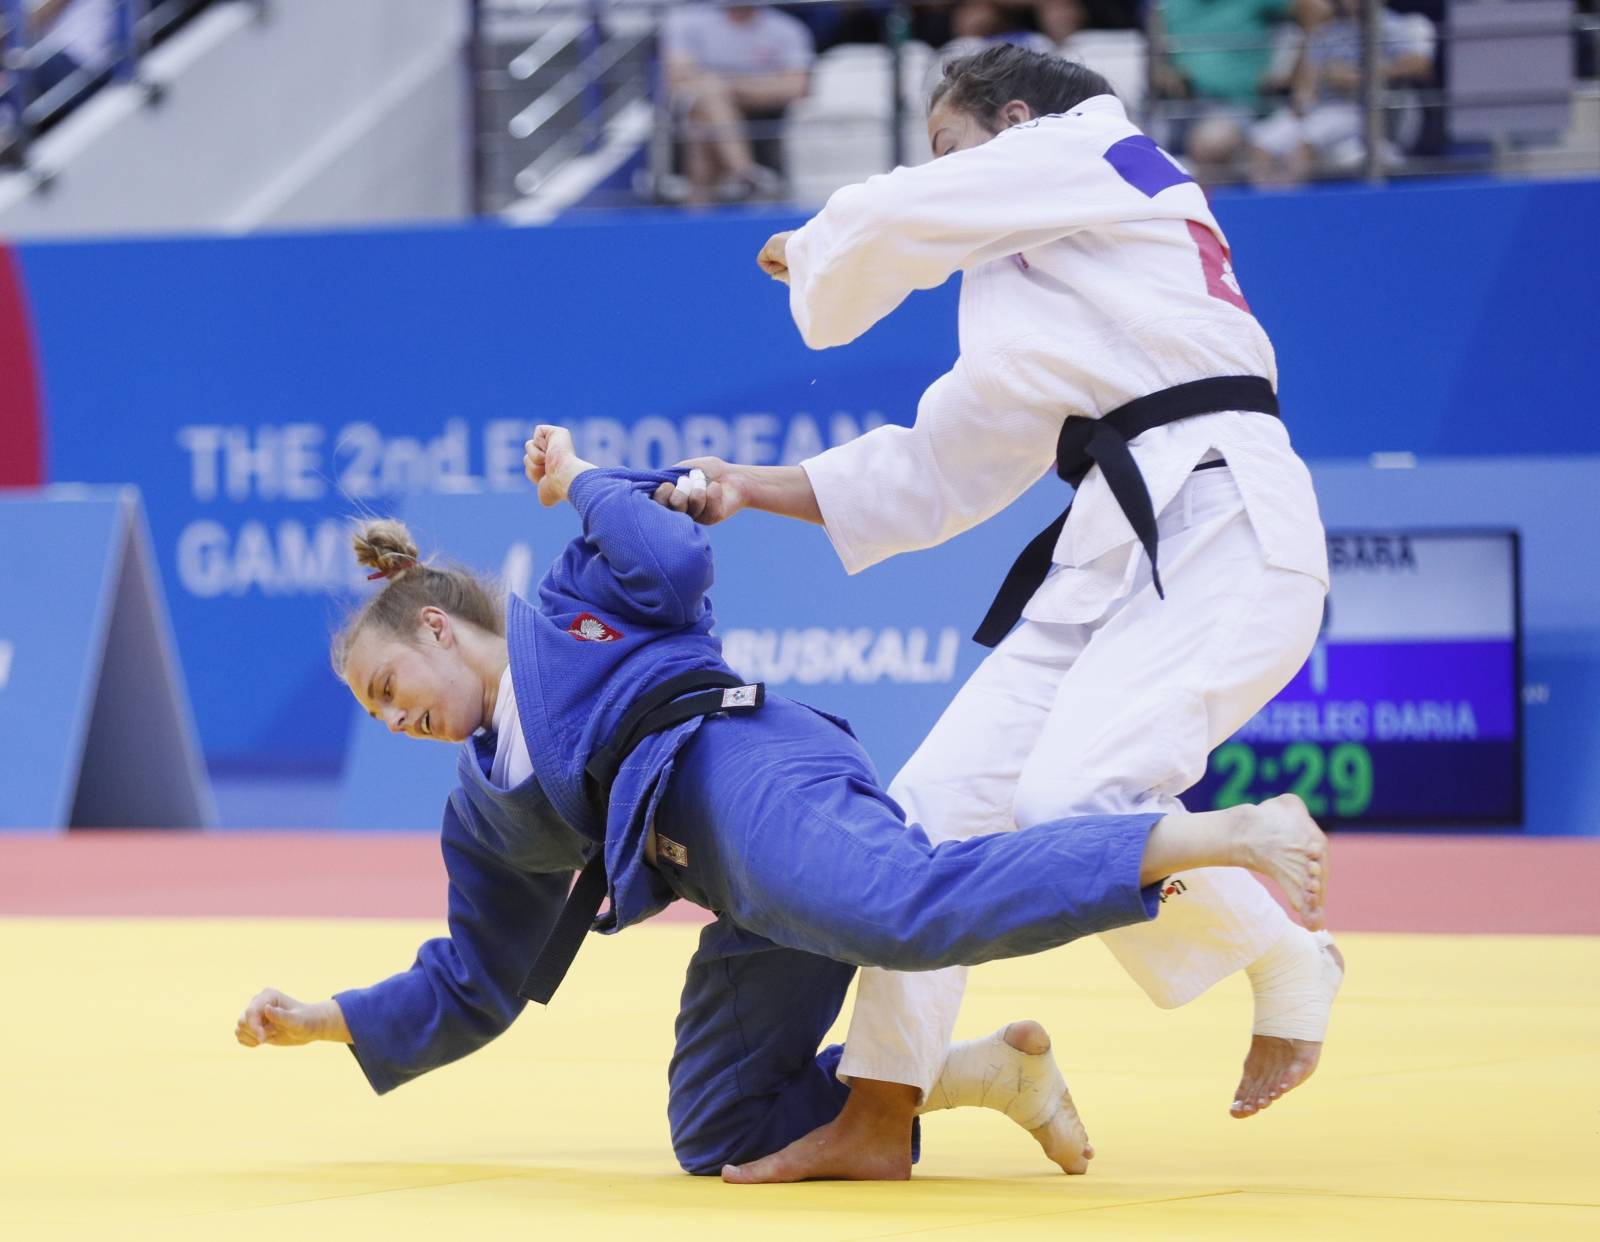 2019 European Games - Judo - Women's Middle Weight -70kg